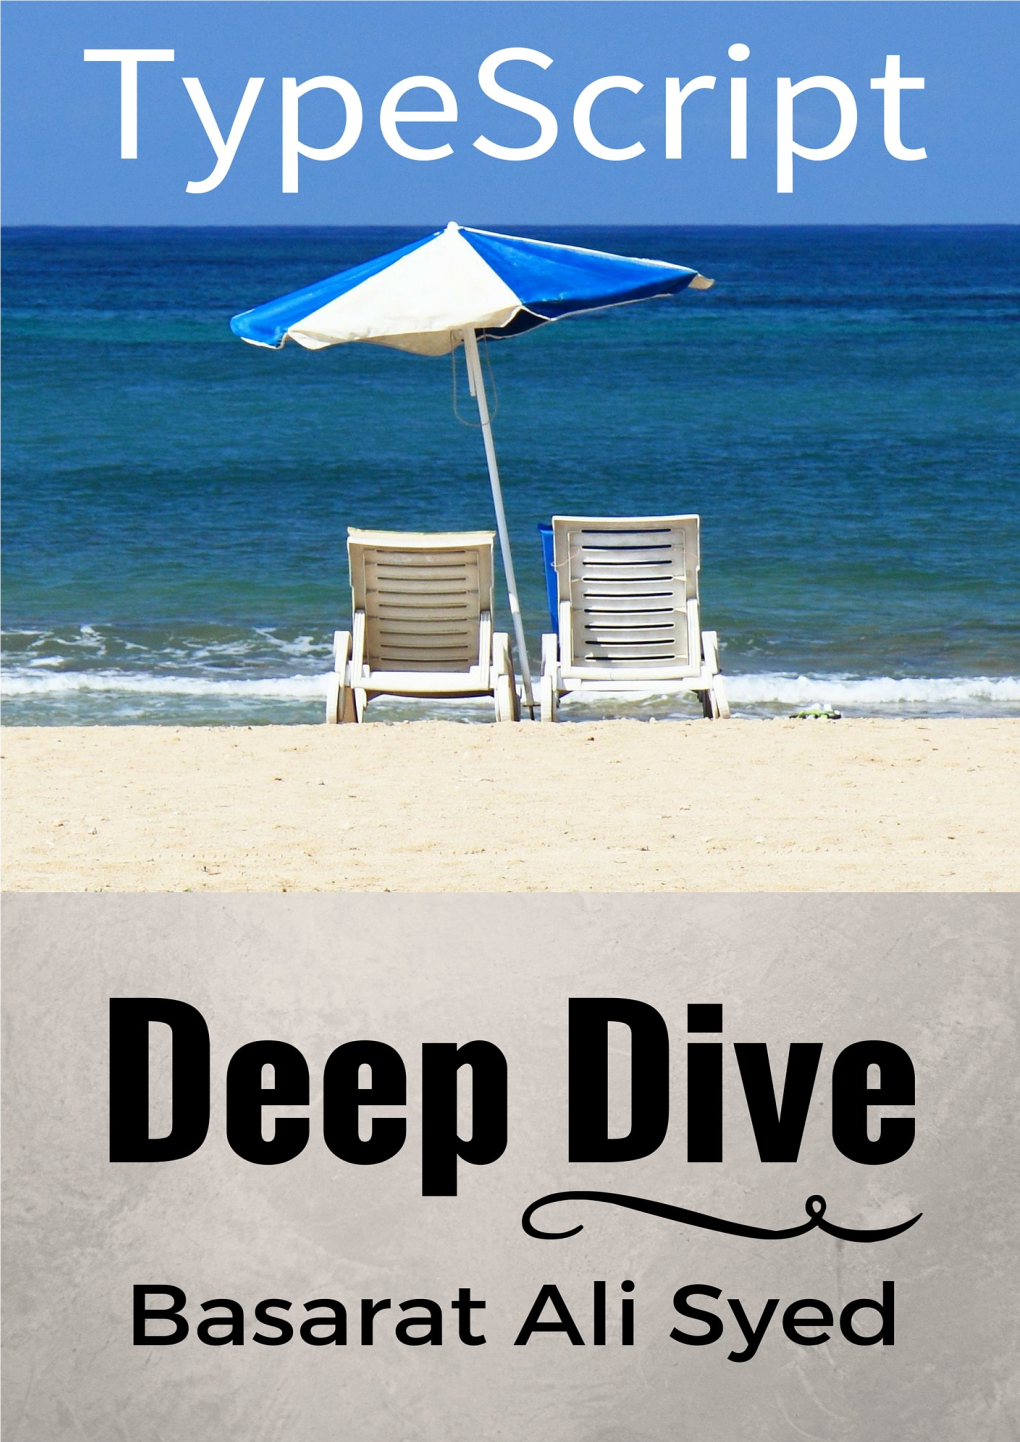 Typescript Deep Dive Book